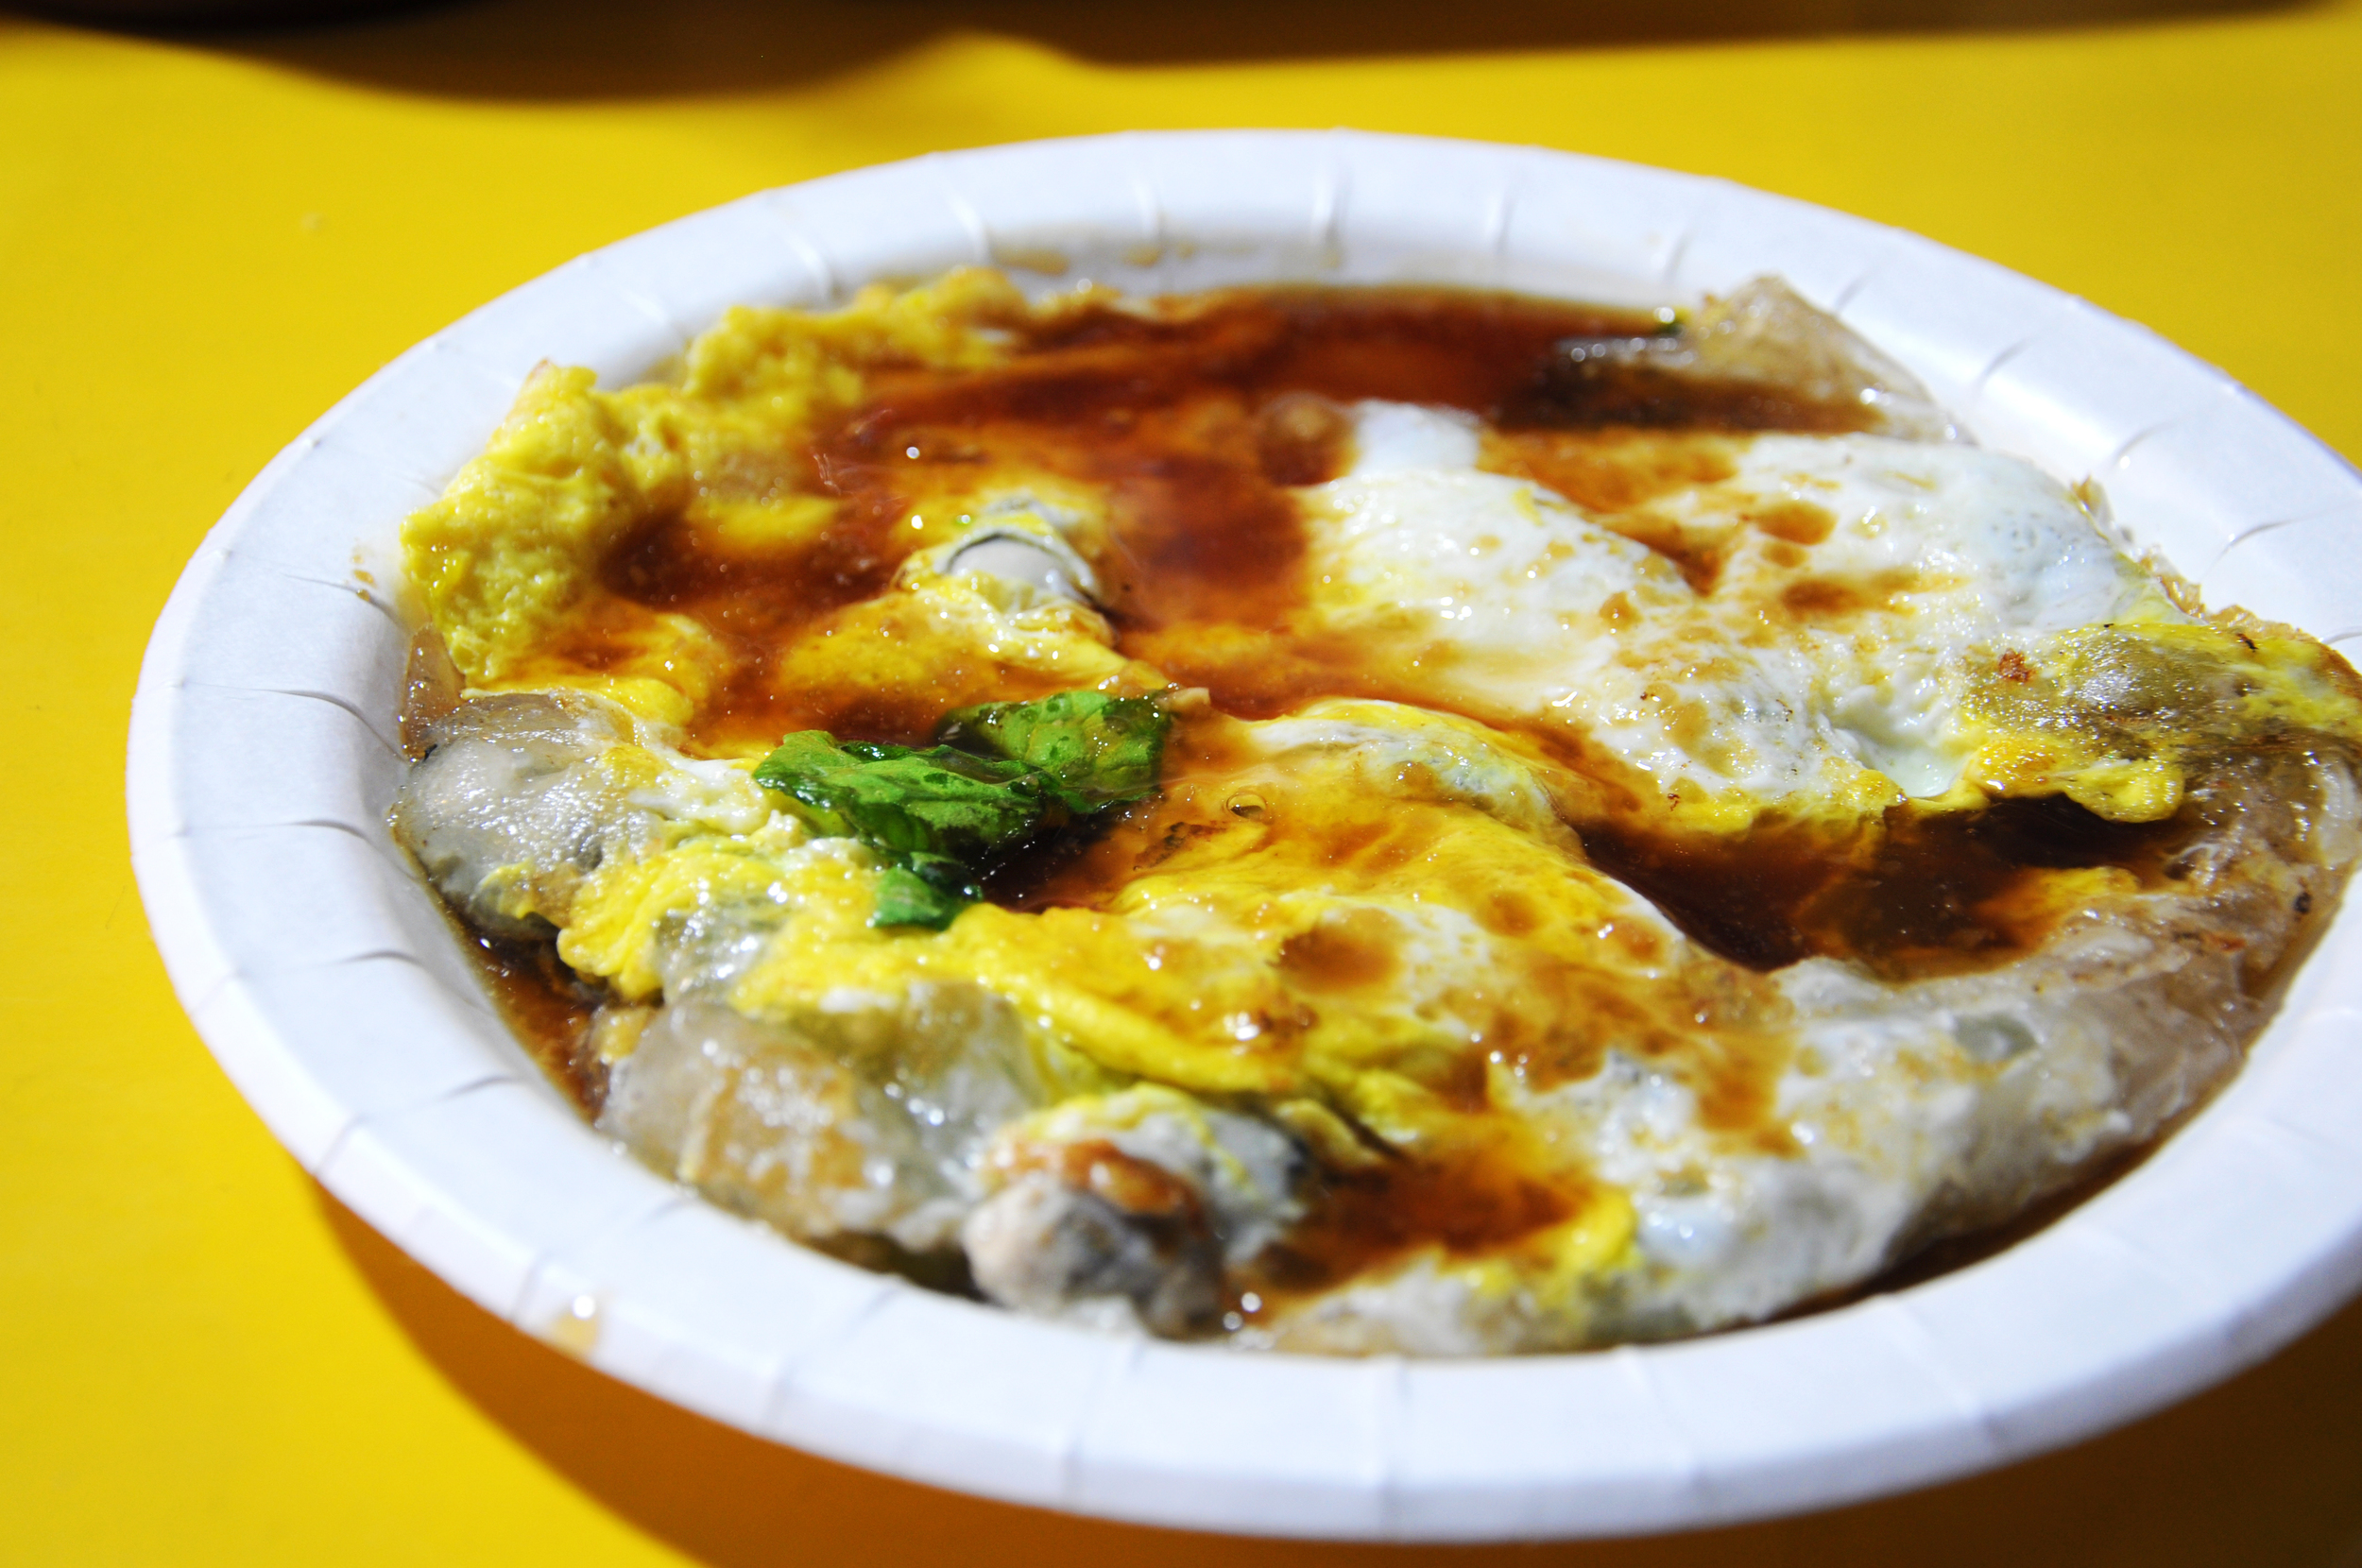  Oyster omelet at Raohe Street Night Market 